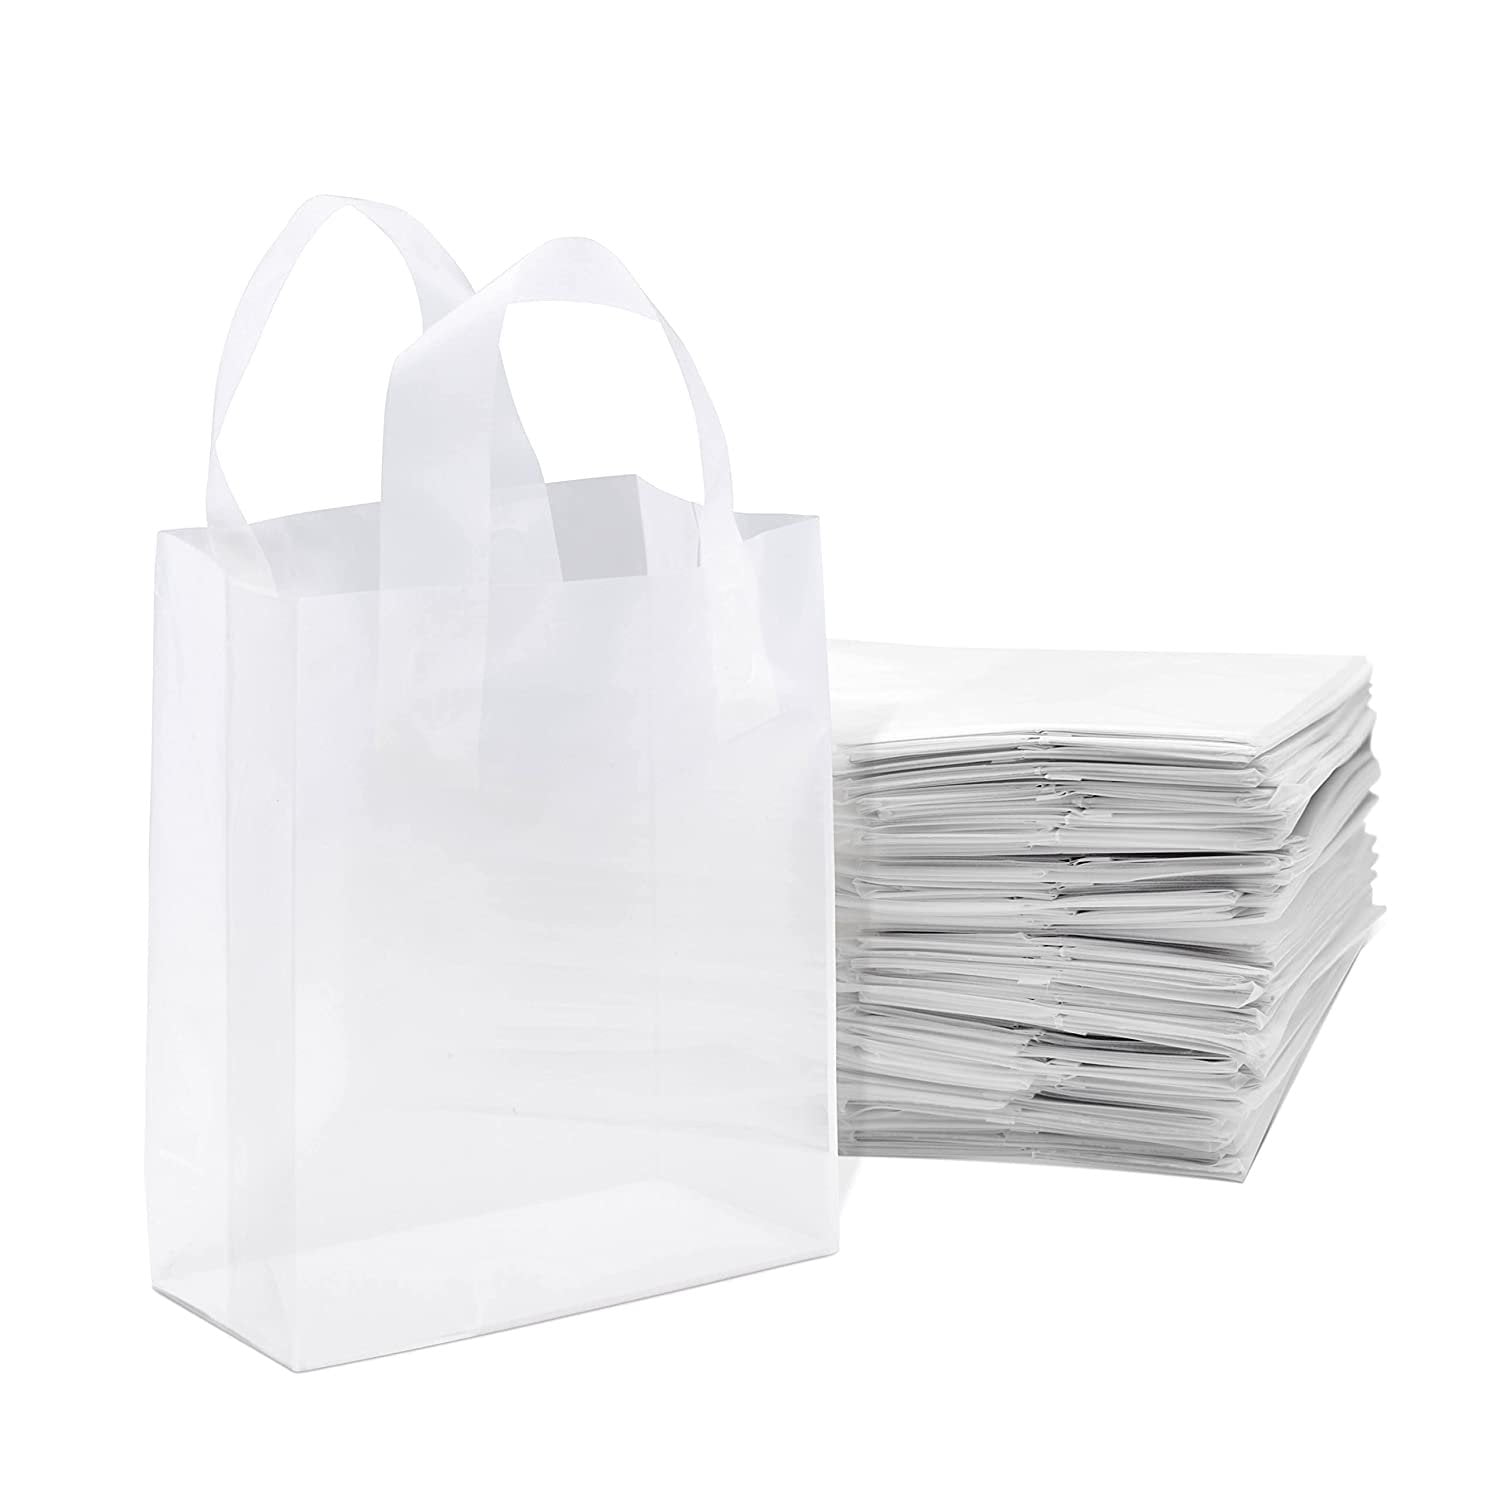 100 pcs Plastic Bag Clear Pouch Handbag Food Packaging Bag for Supermarket Store